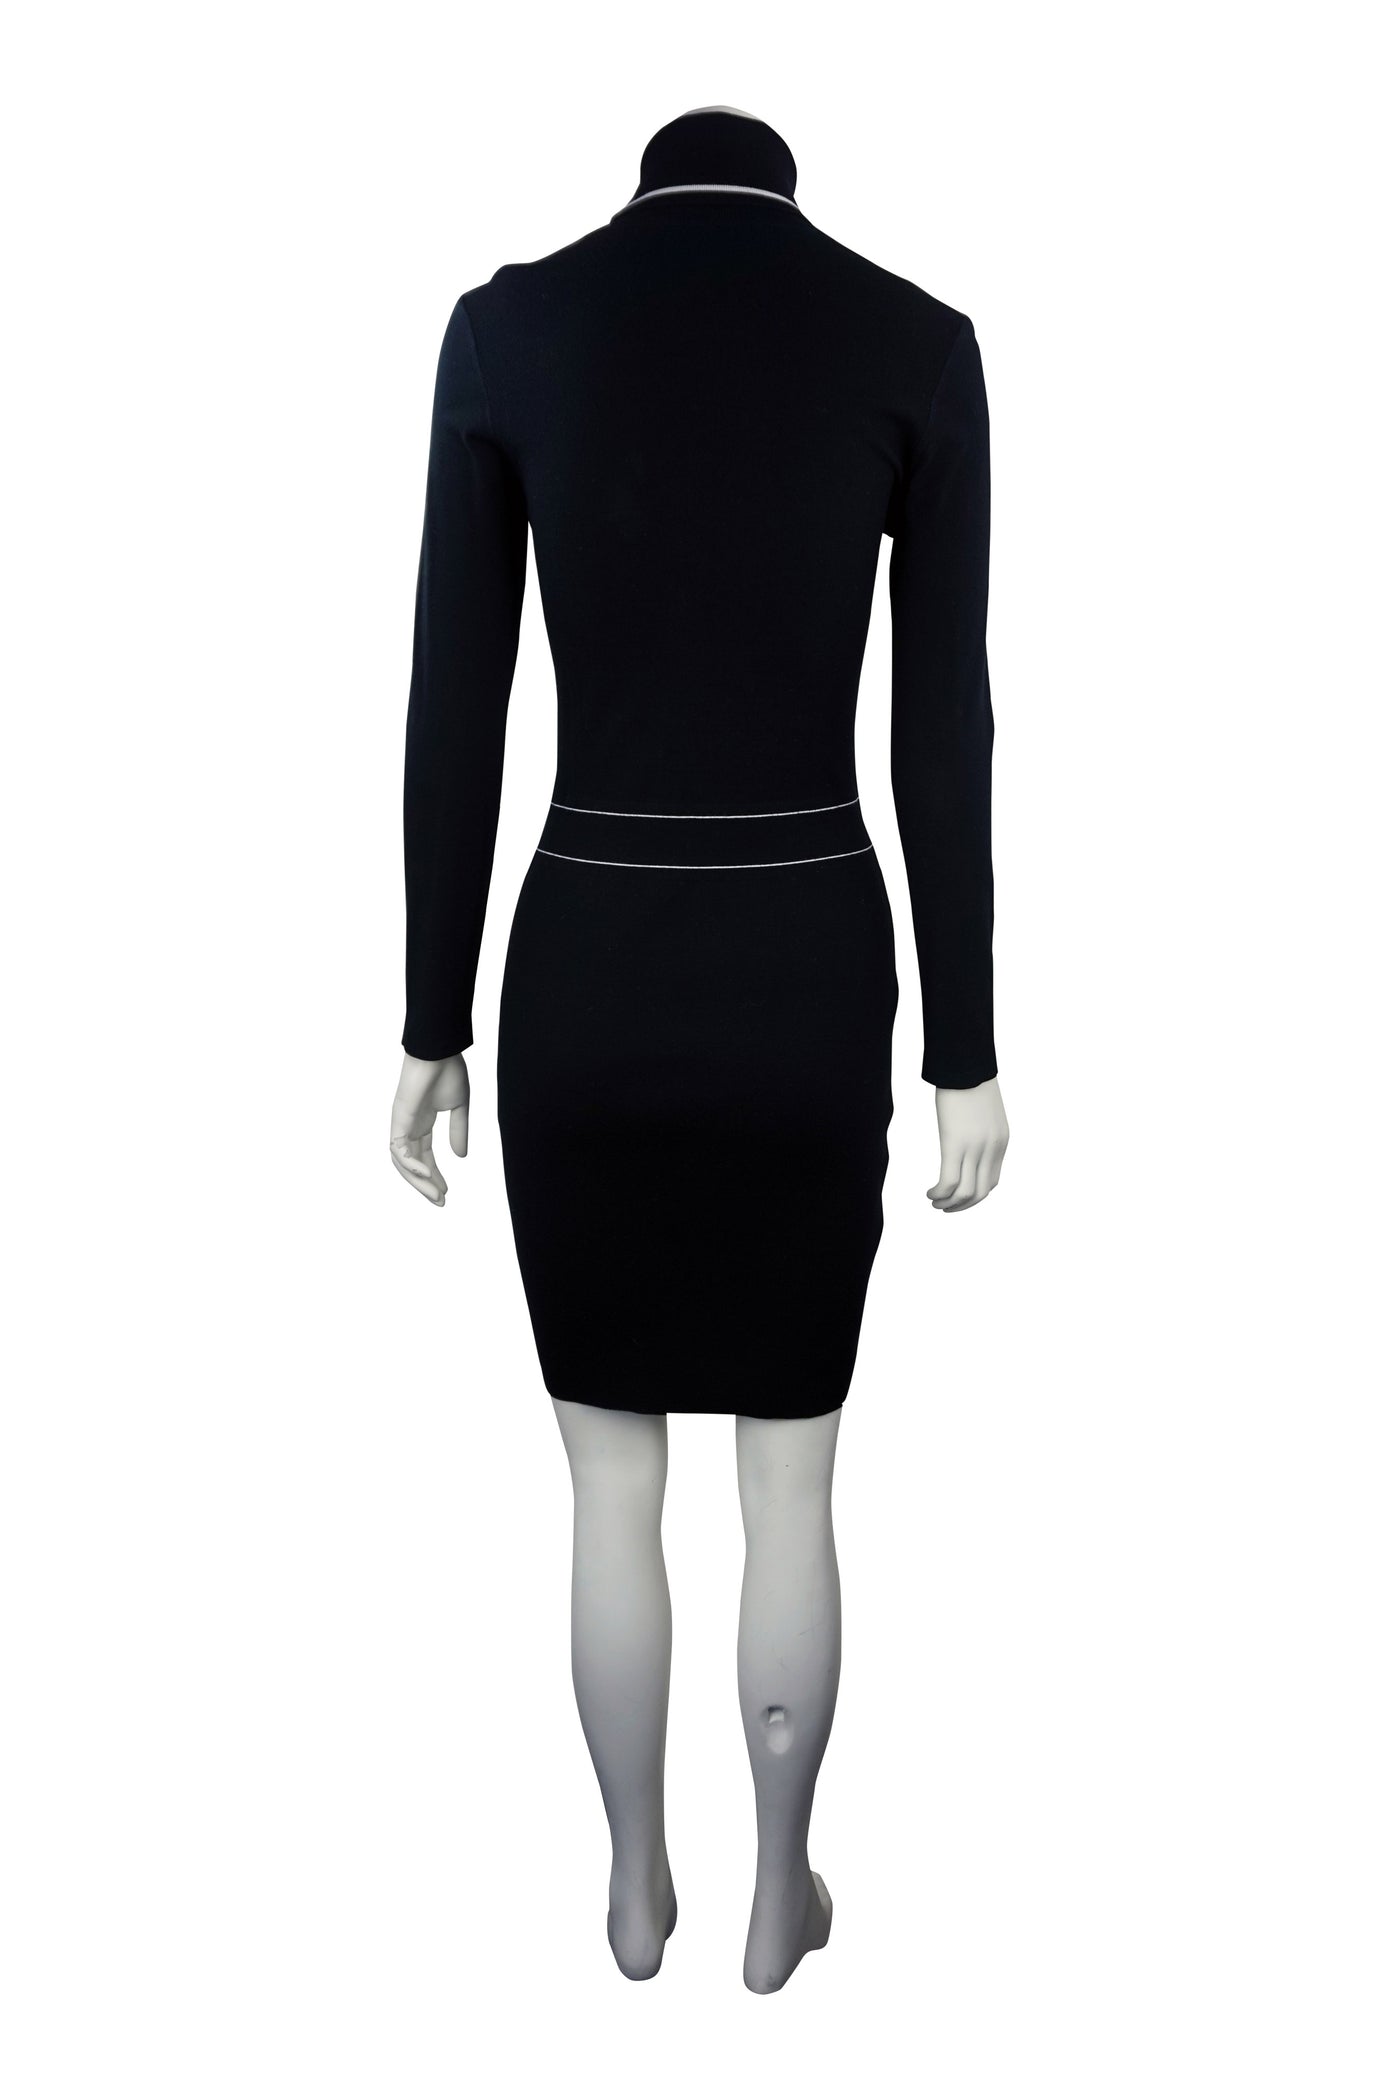 Turtleneck black knit dress